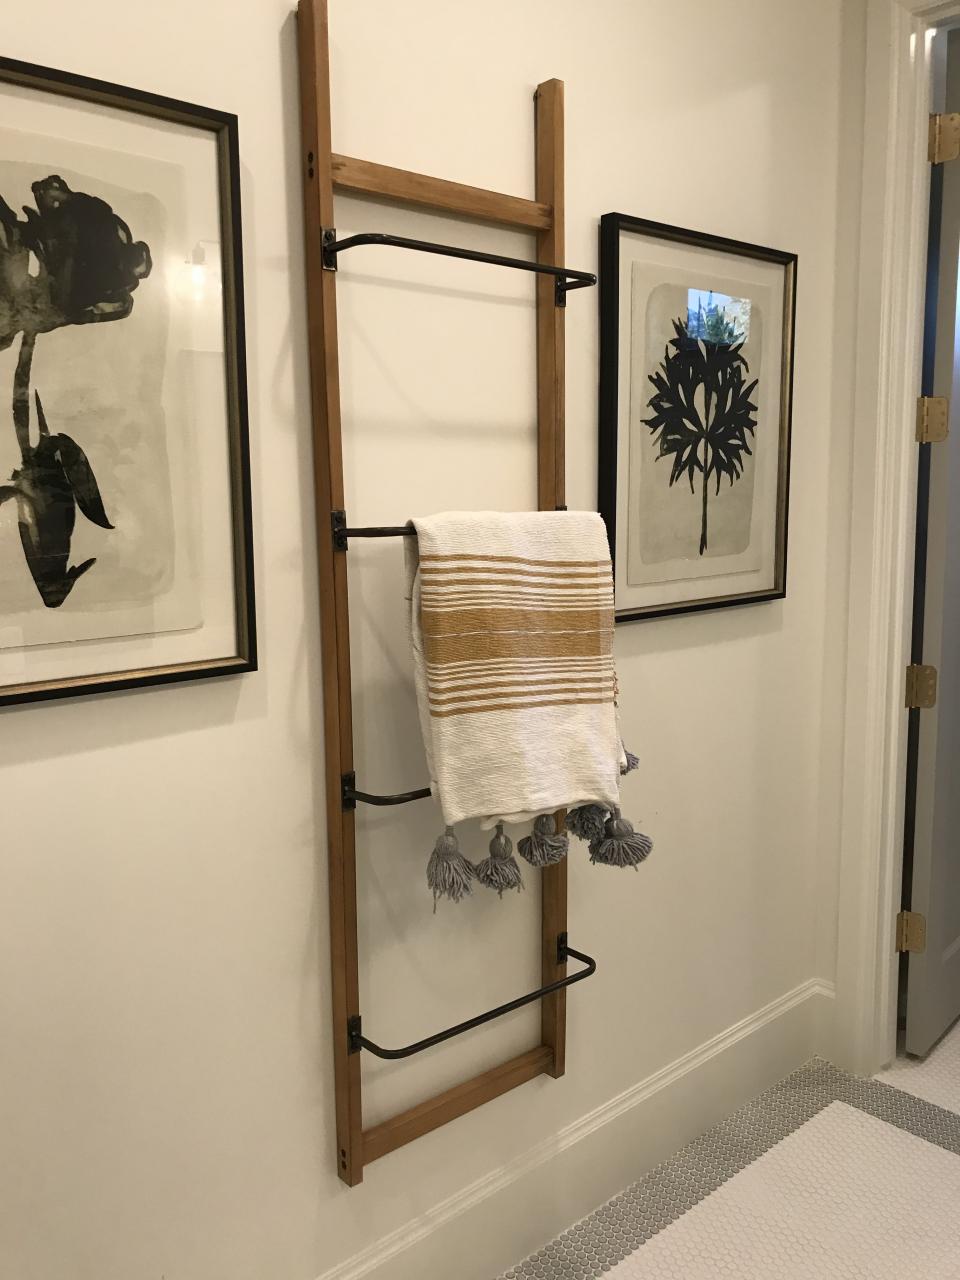 Towel bar for kids bathroom Towel Bars In Bathroom Ideas, Towel Hangers